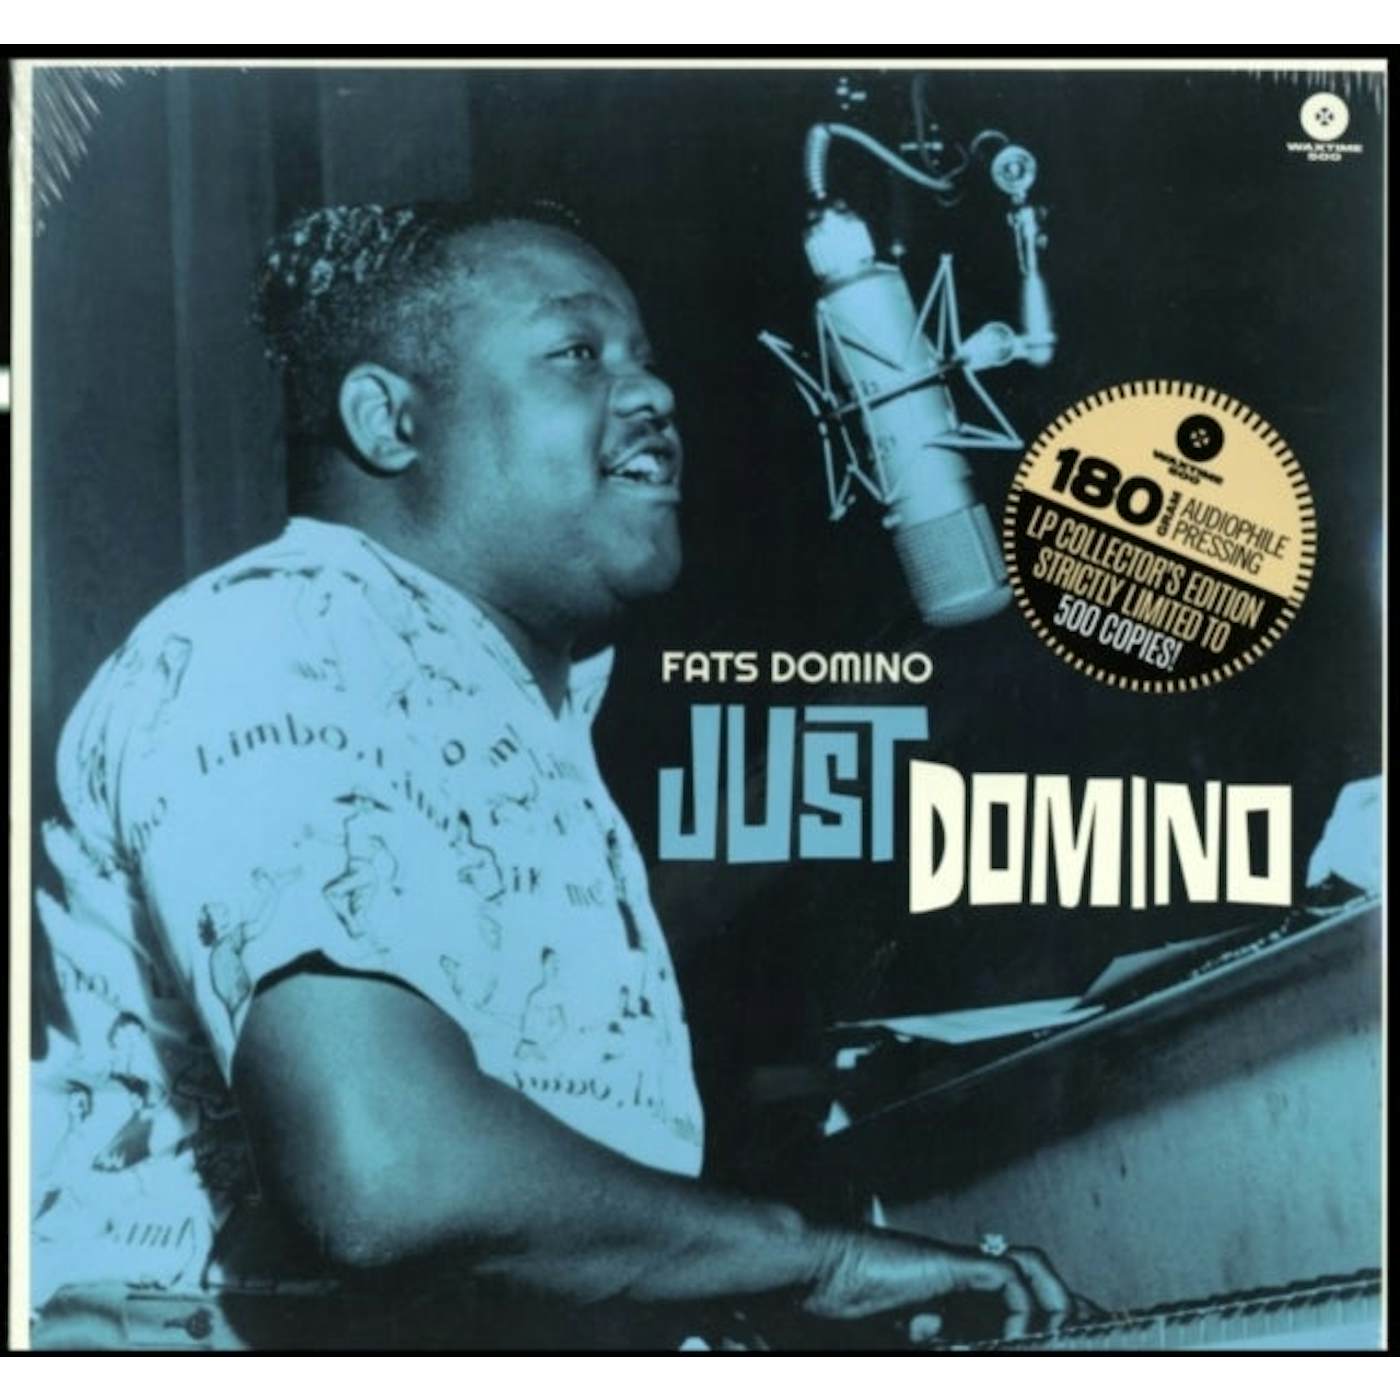 Fats Domino LP Vinyl Record - Just Domino